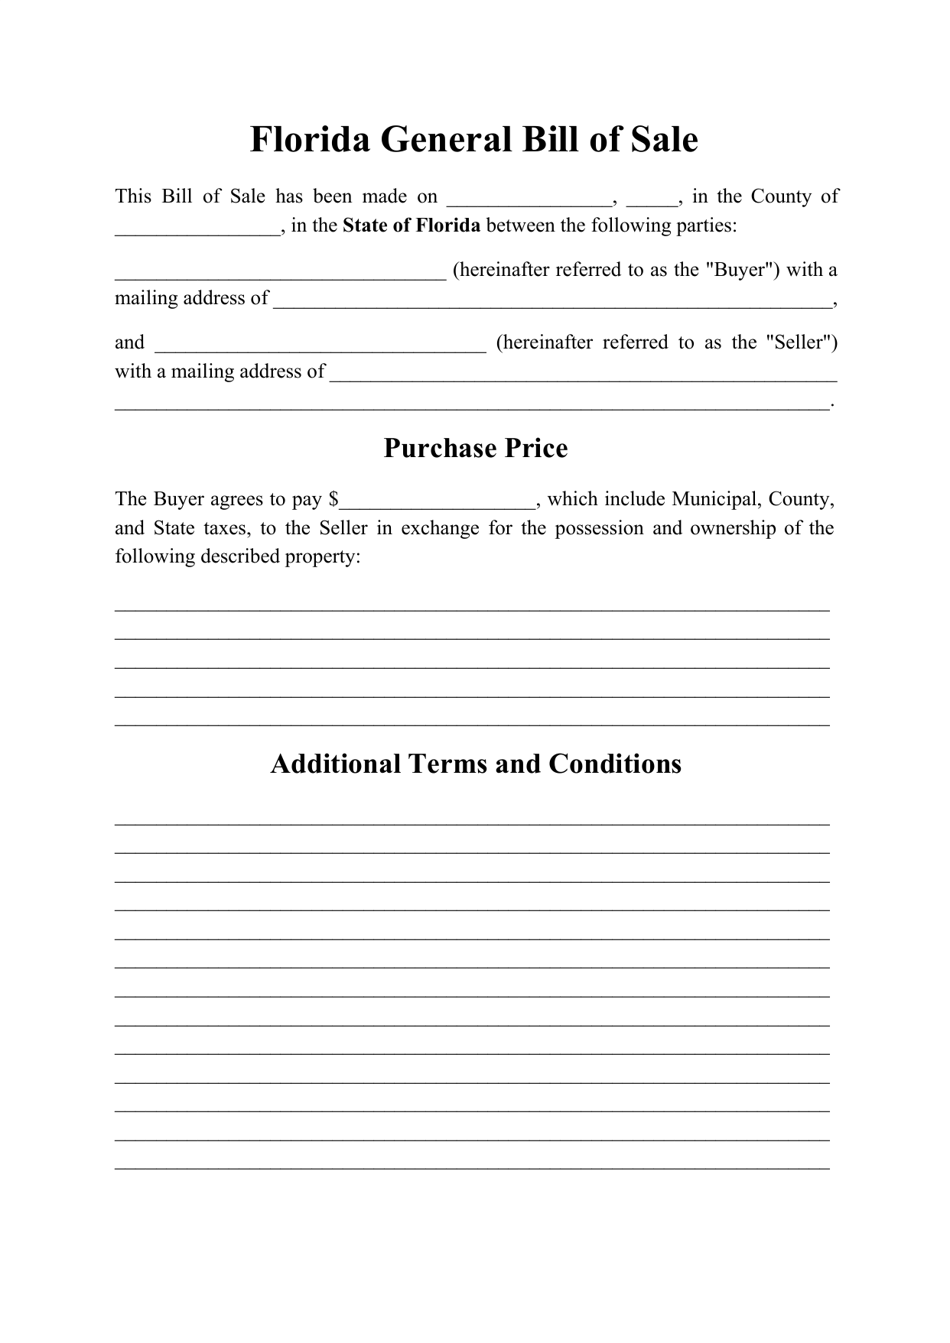 vehicle printable bill of sale template pdf